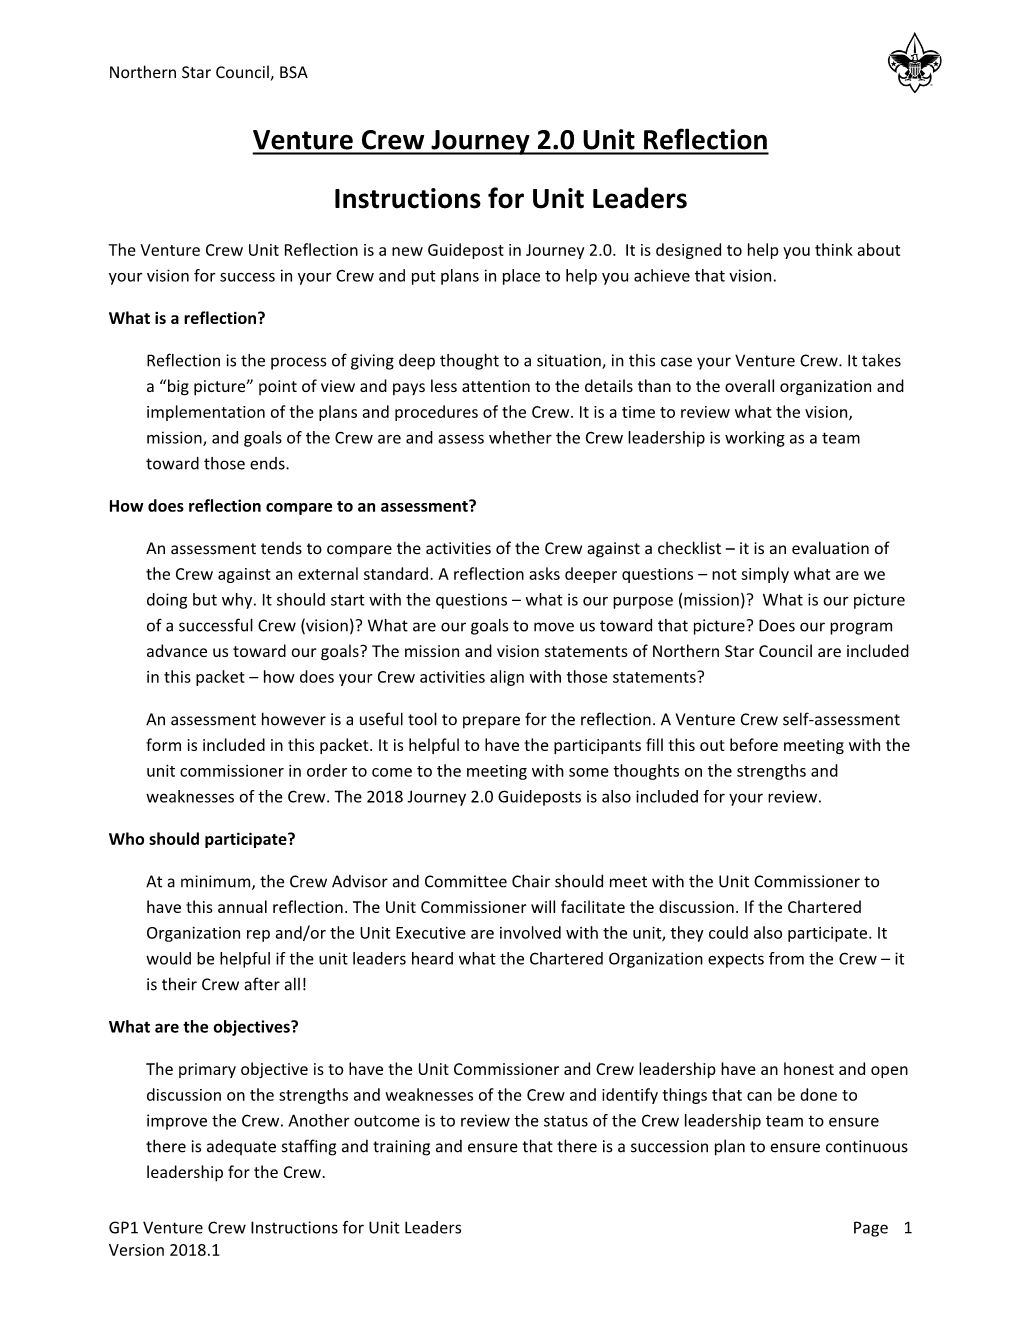 Venture Crew Journey 2.0 Unit Reflection Instructions for Unit Leaders